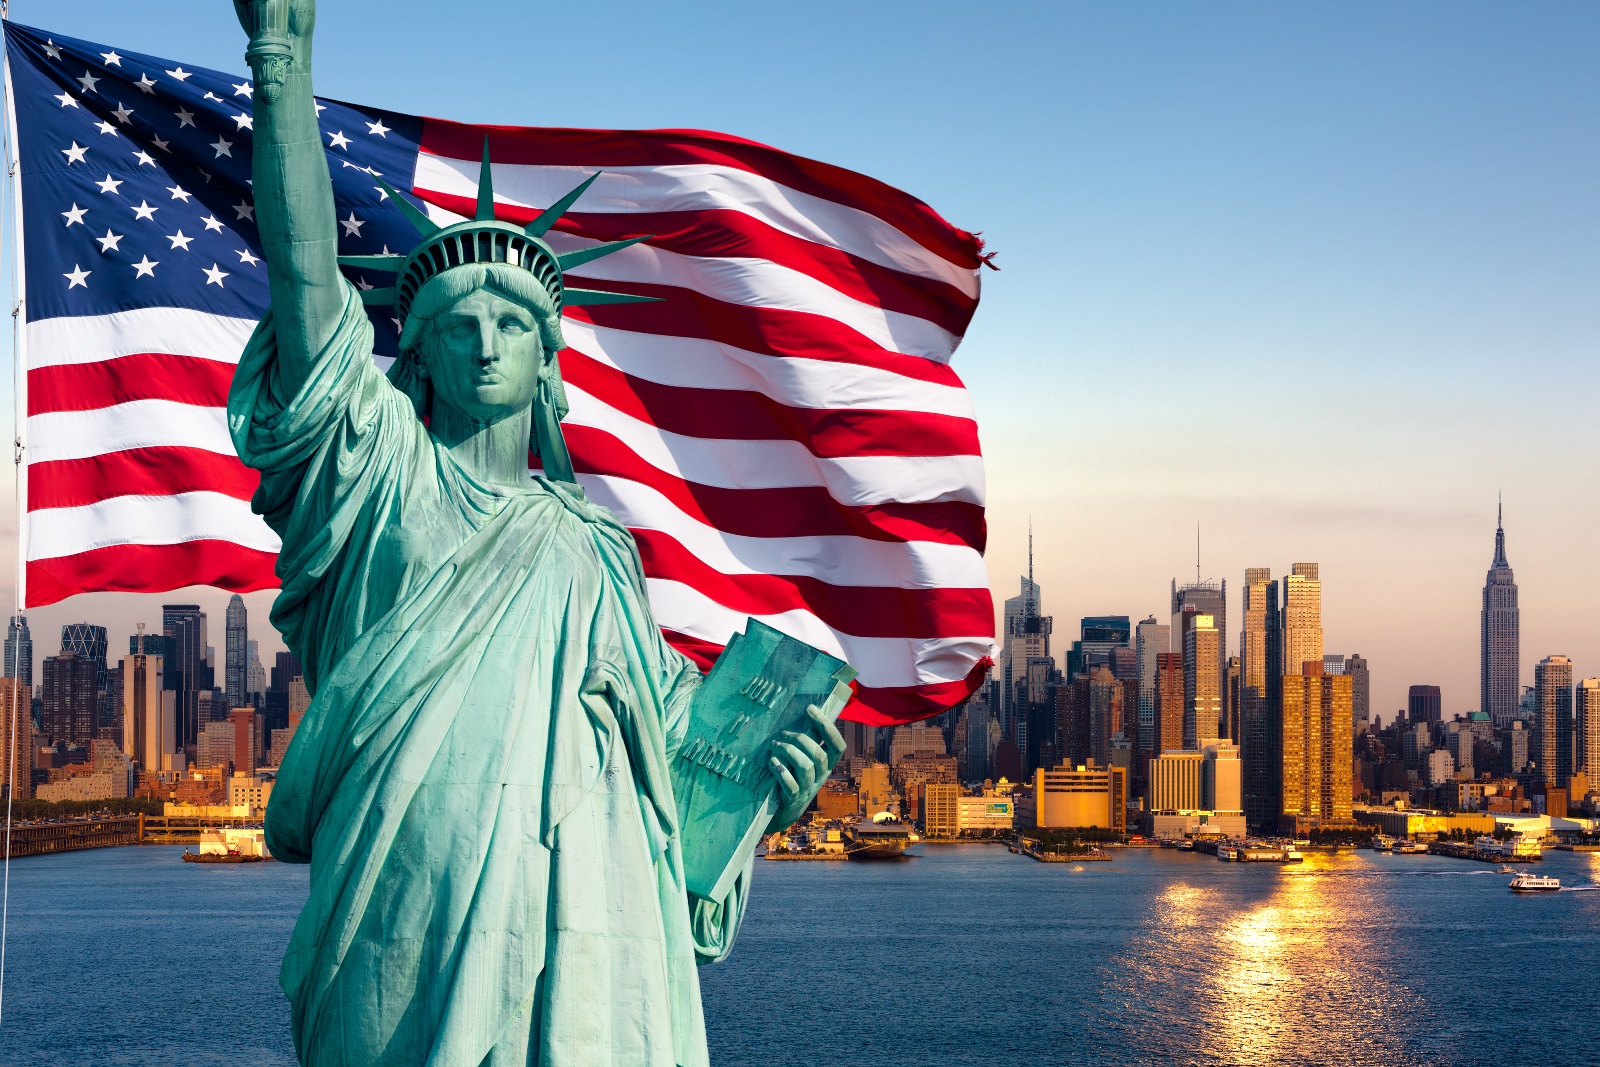 Statue of Liberty - New York